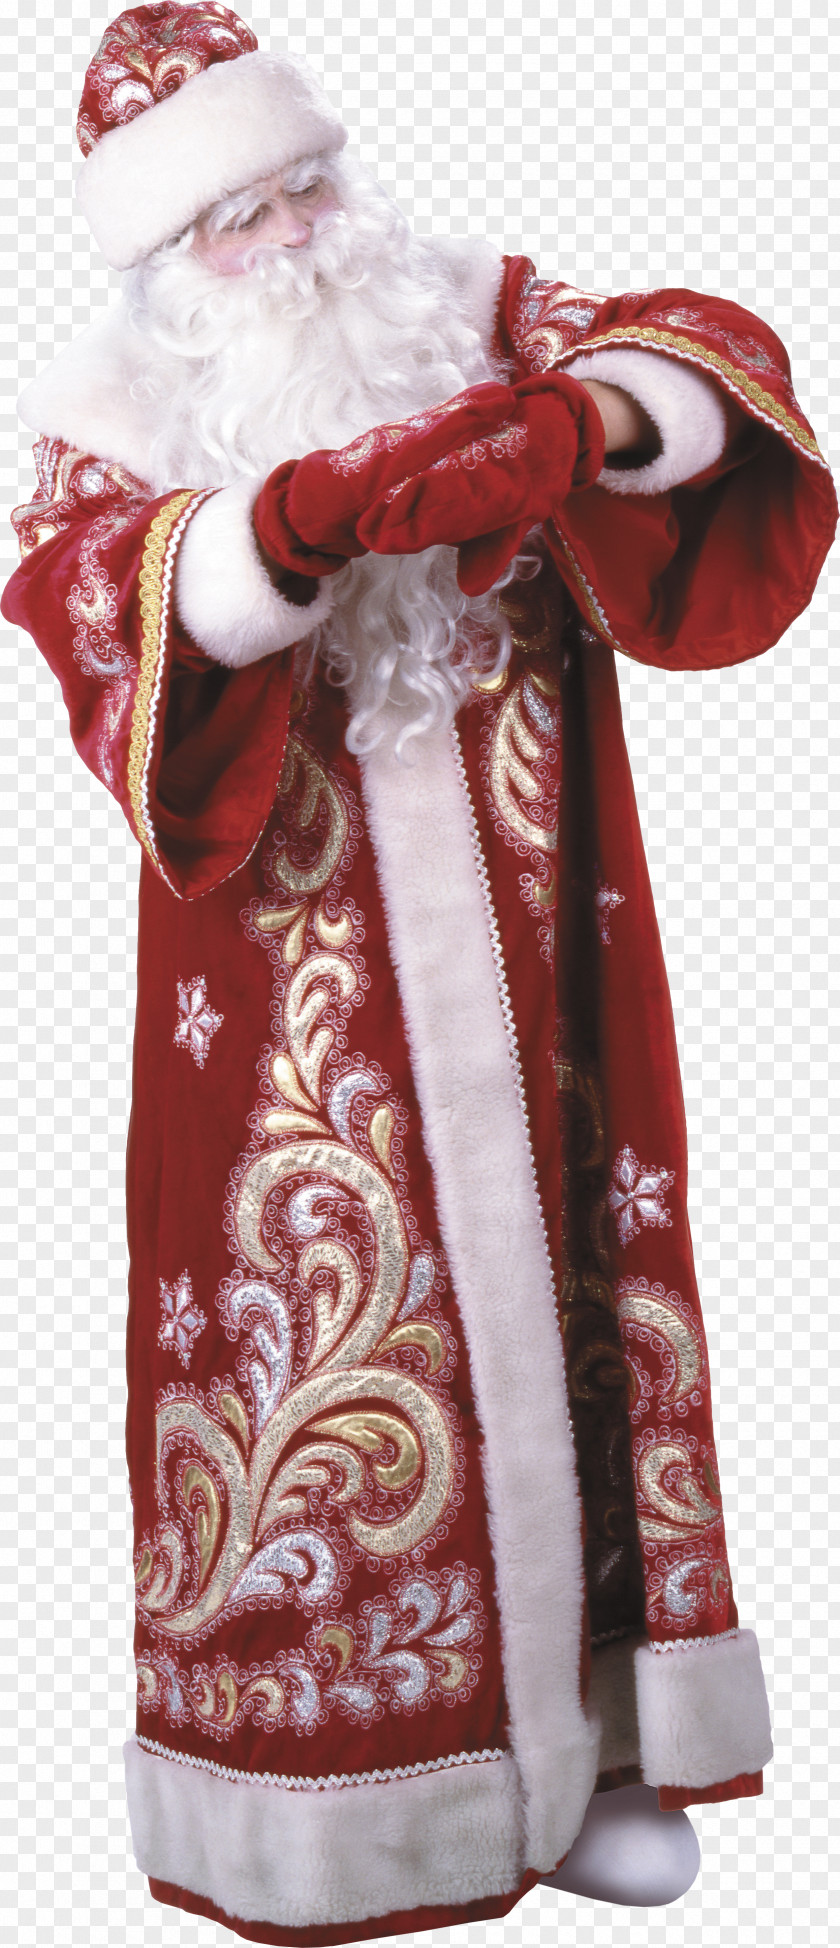 Santa Claus Snegurochka Ded Moroz Christmas Ornament Decoration PNG